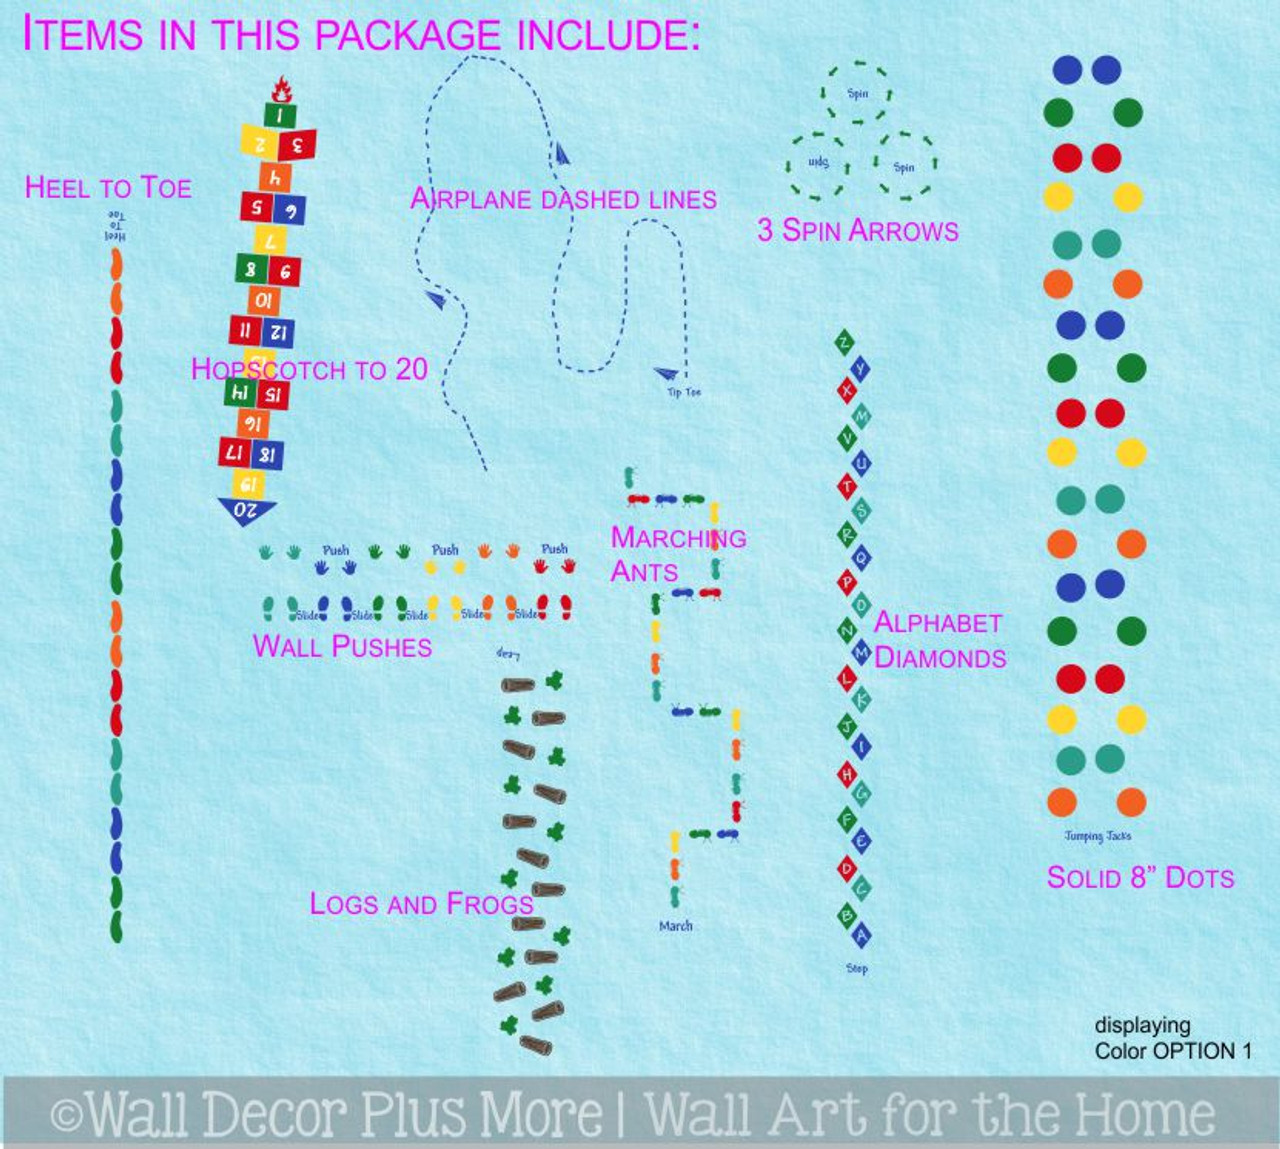 Sensory Path Package Floor Decal Stickers School Hallway Art covers 61 ft